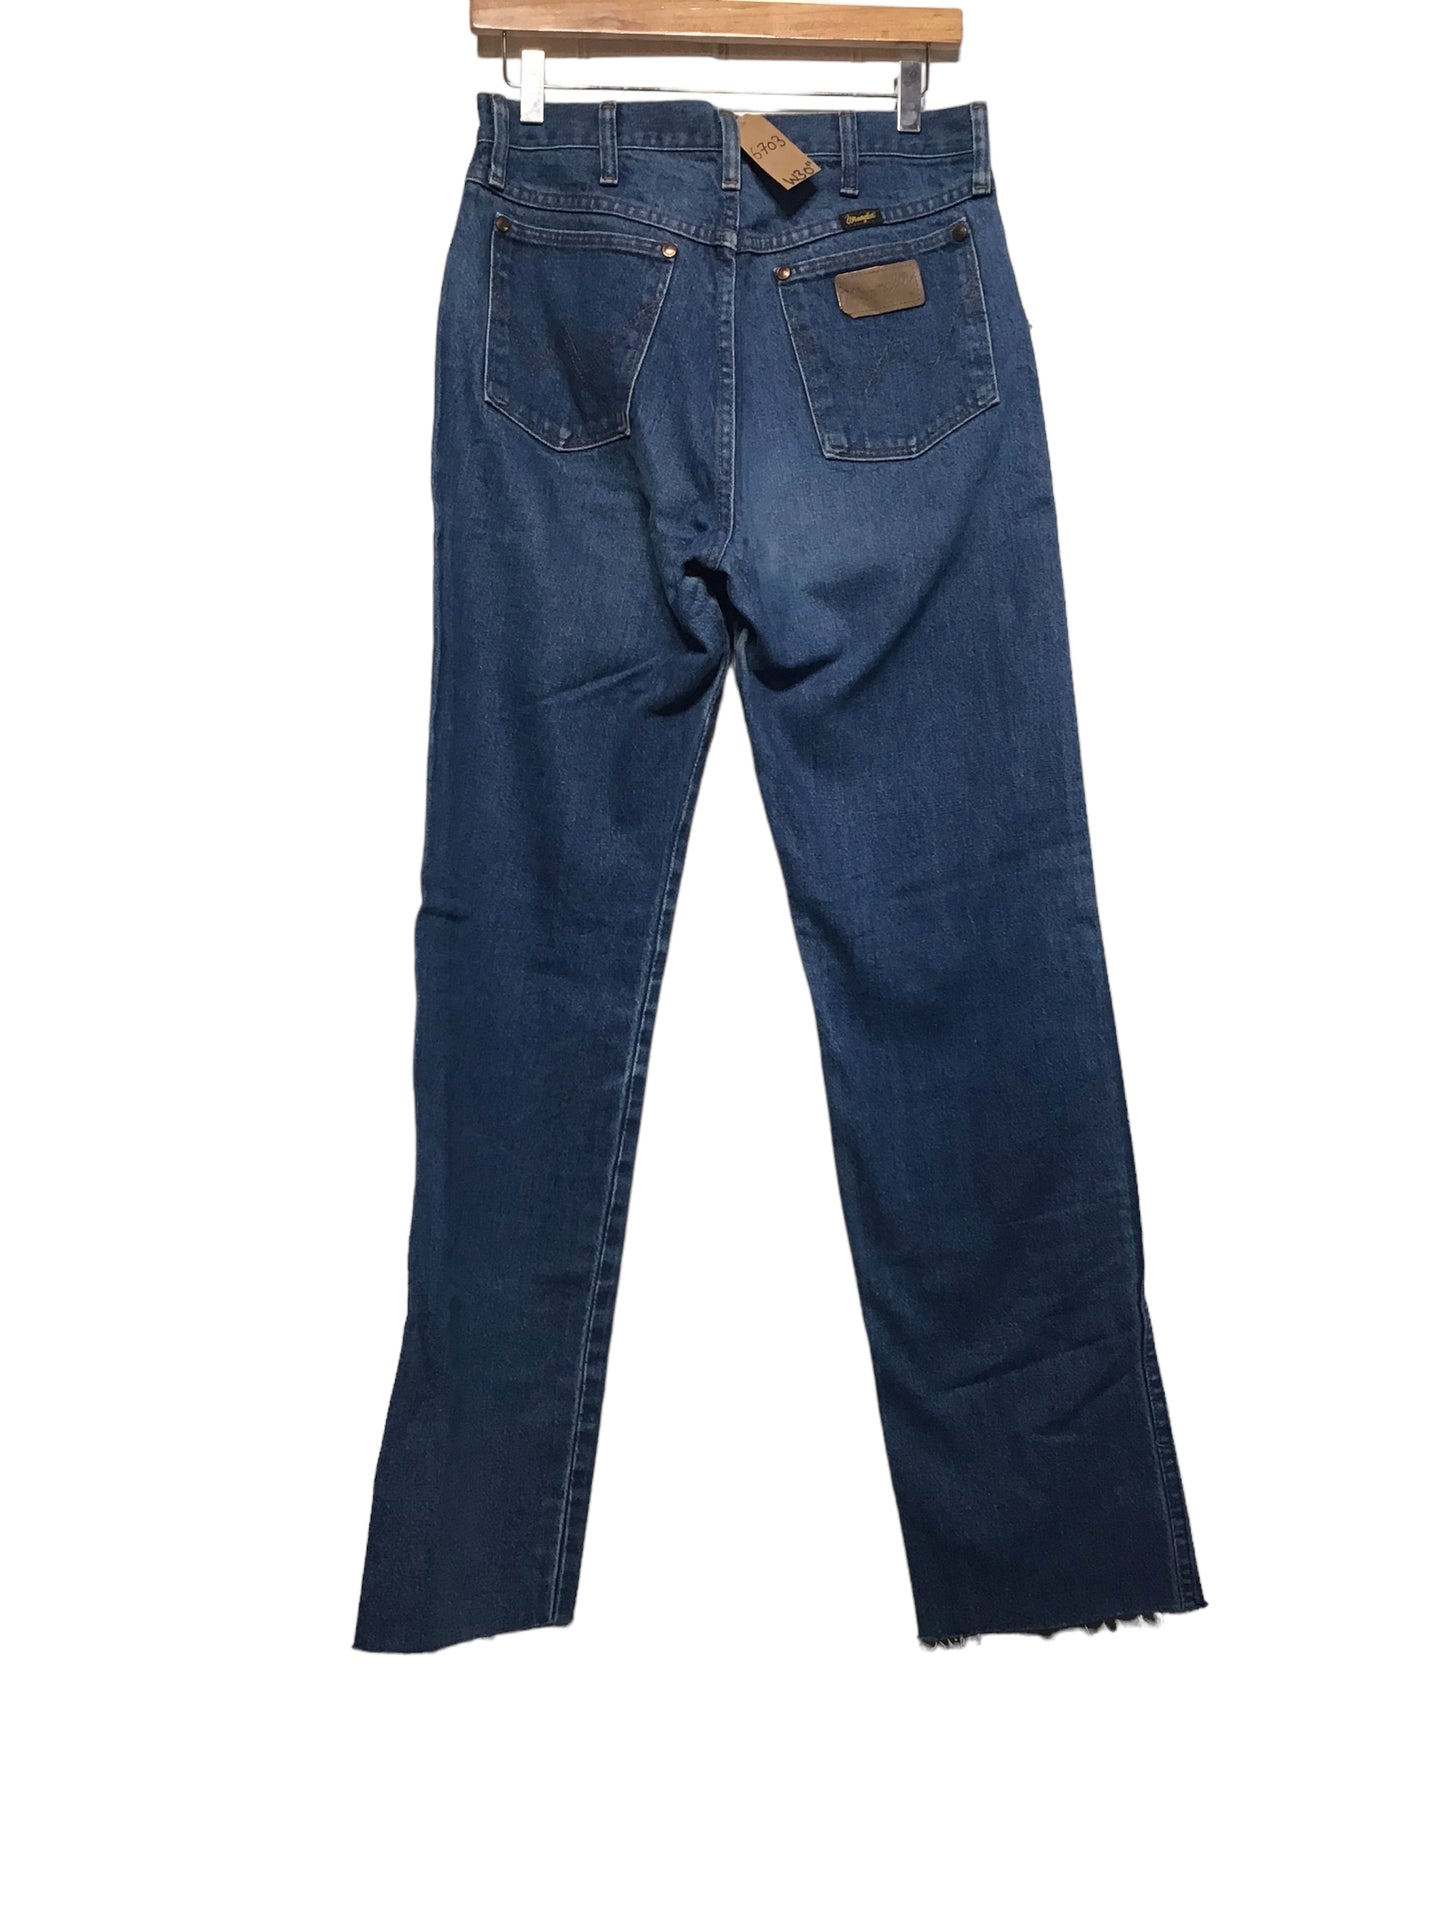 Wrangler Jeans (30x33)